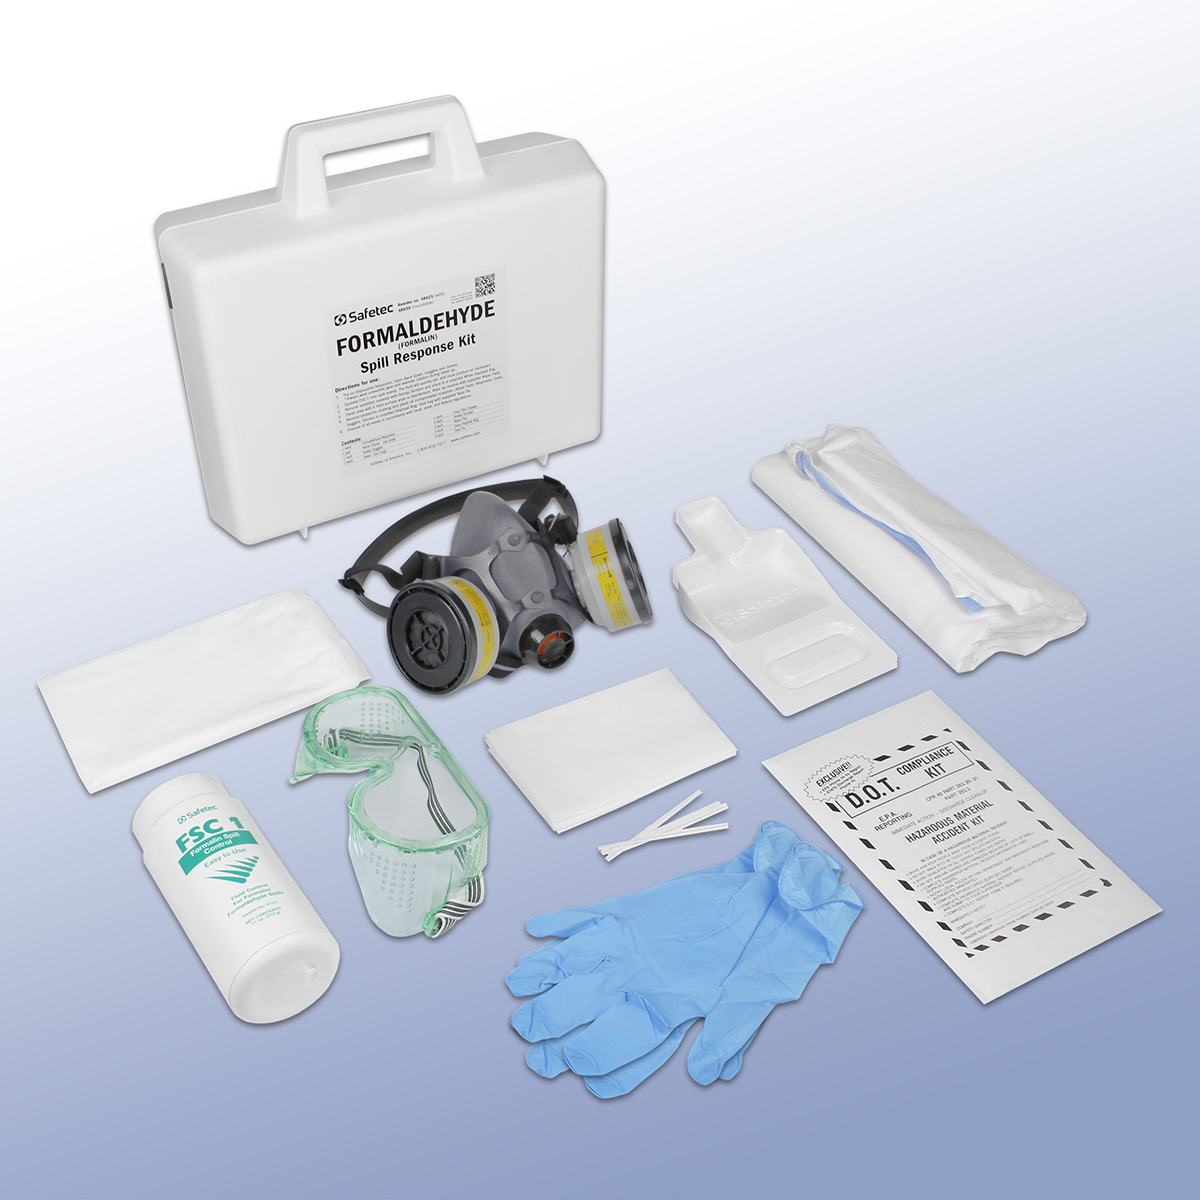 #48630 SafeTec® Formaldehyde Spill Response Kit in a hard case